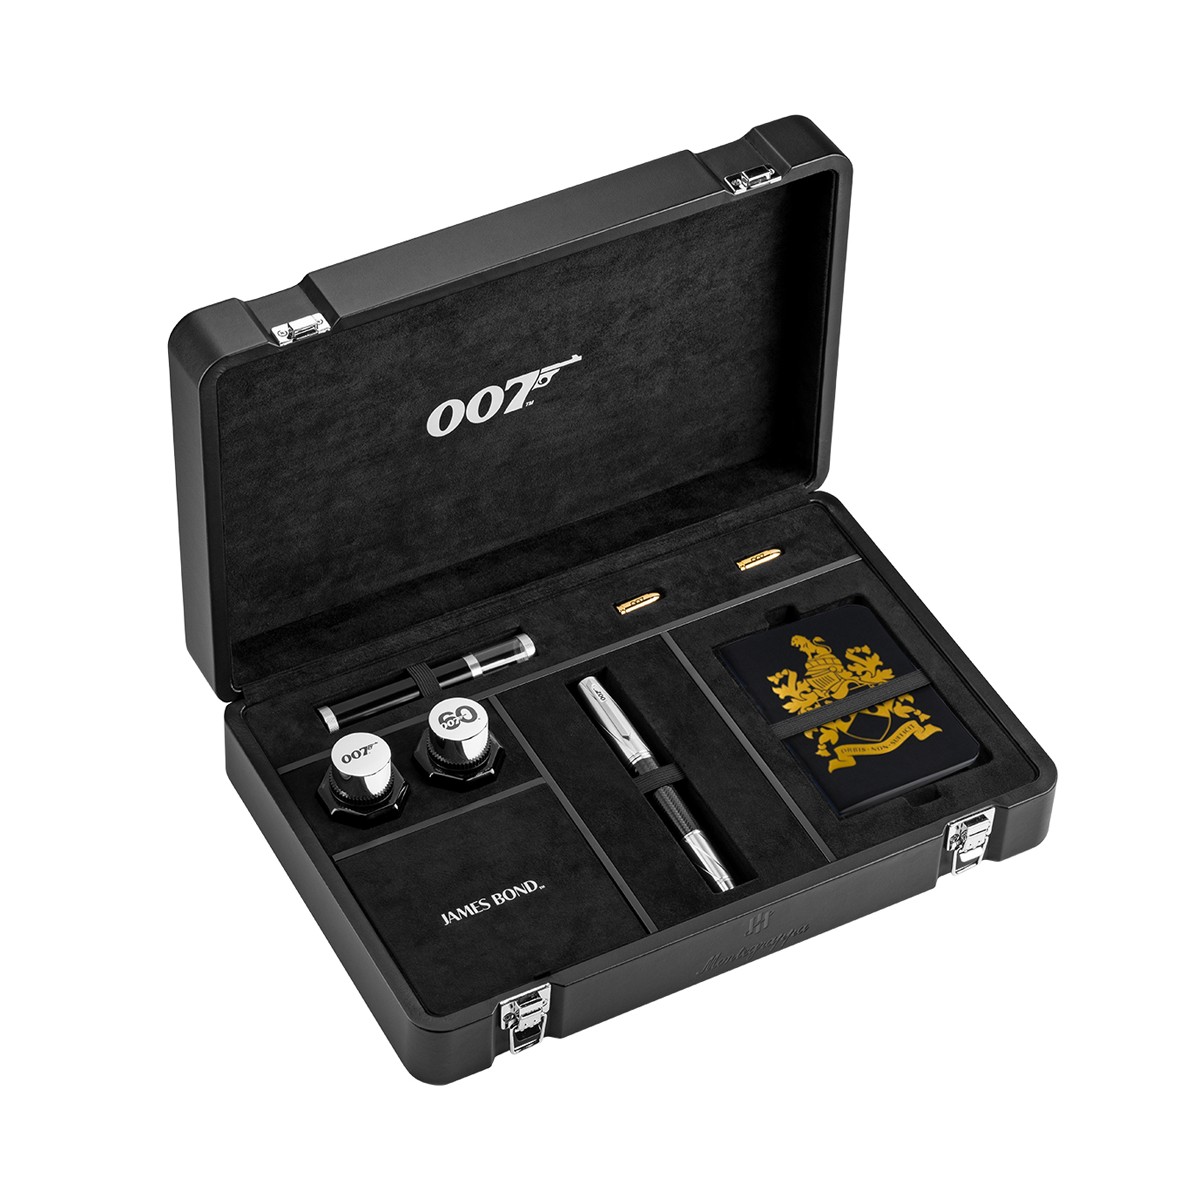 007 Spymaster Duo - Stilografica - Limited Edition